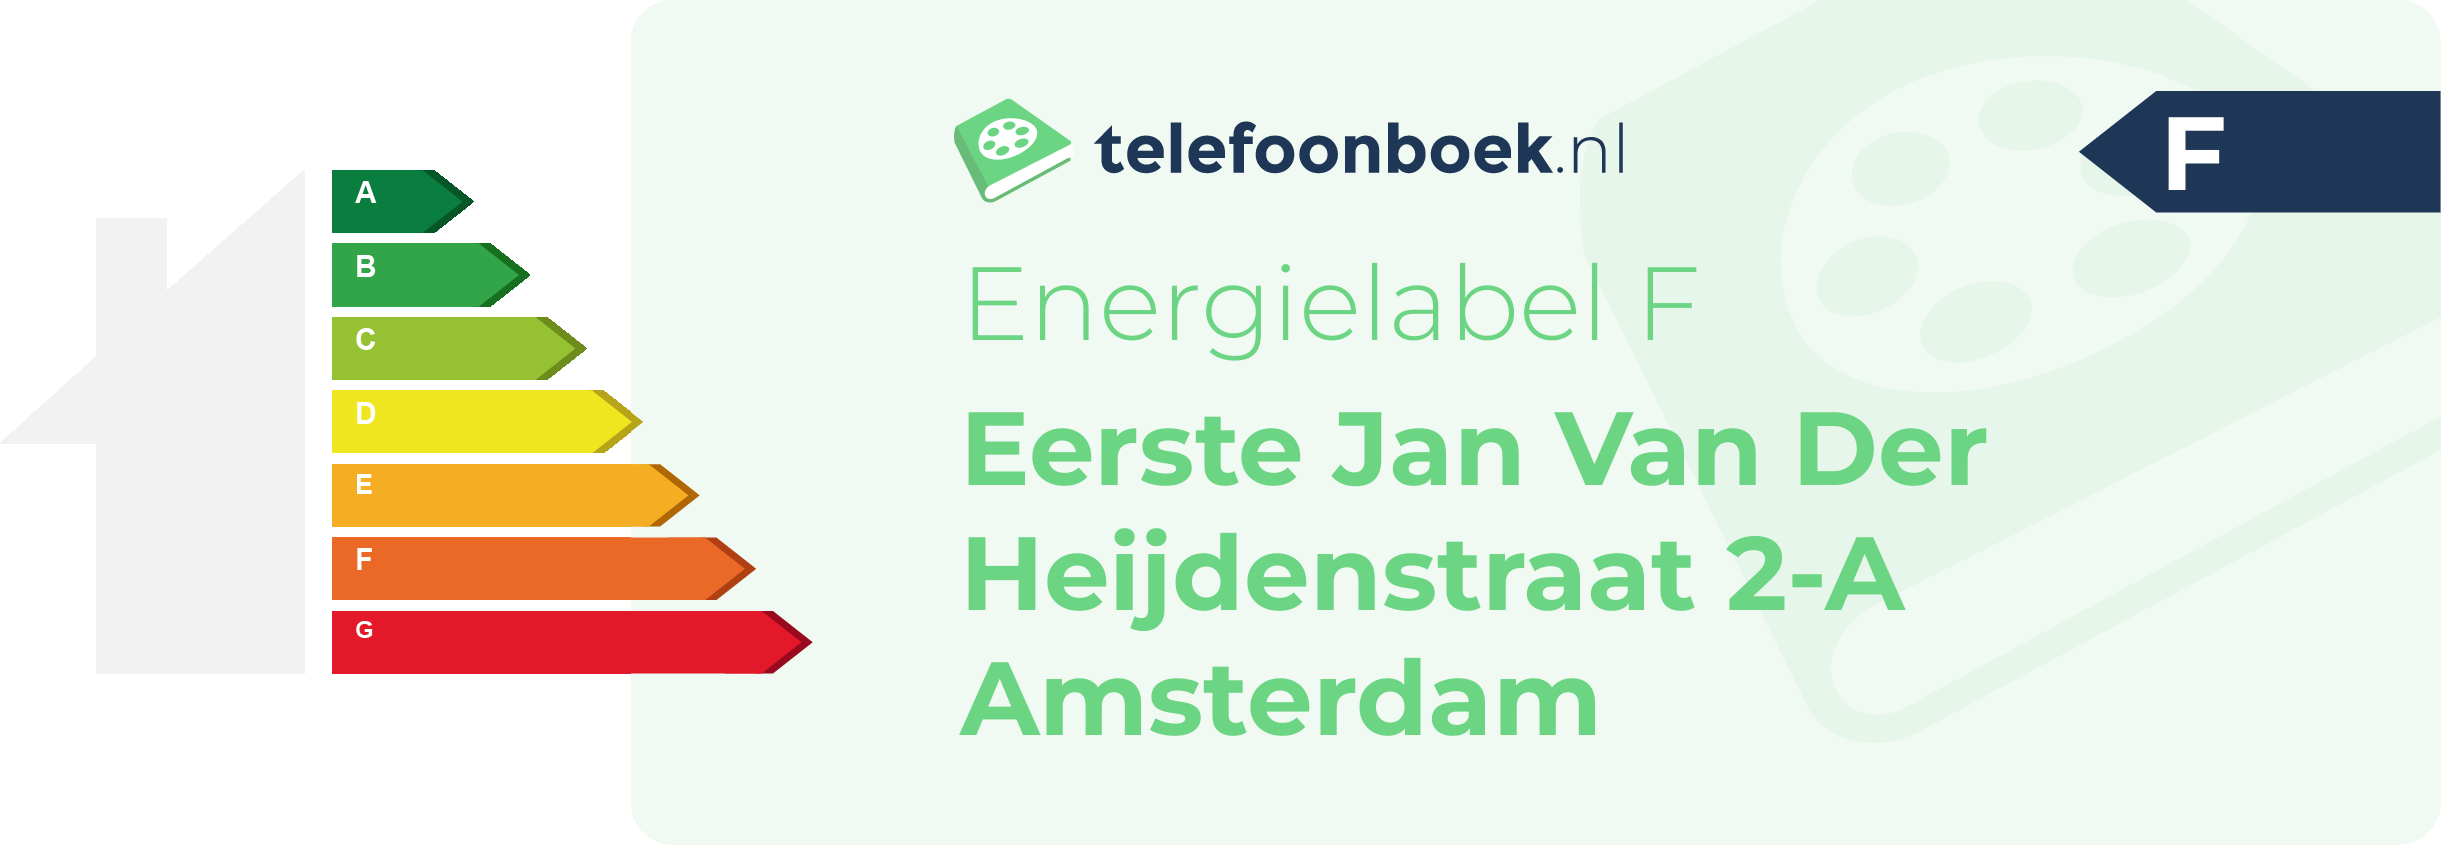 Energielabel Eerste Jan Van Der Heijdenstraat 2-A Amsterdam